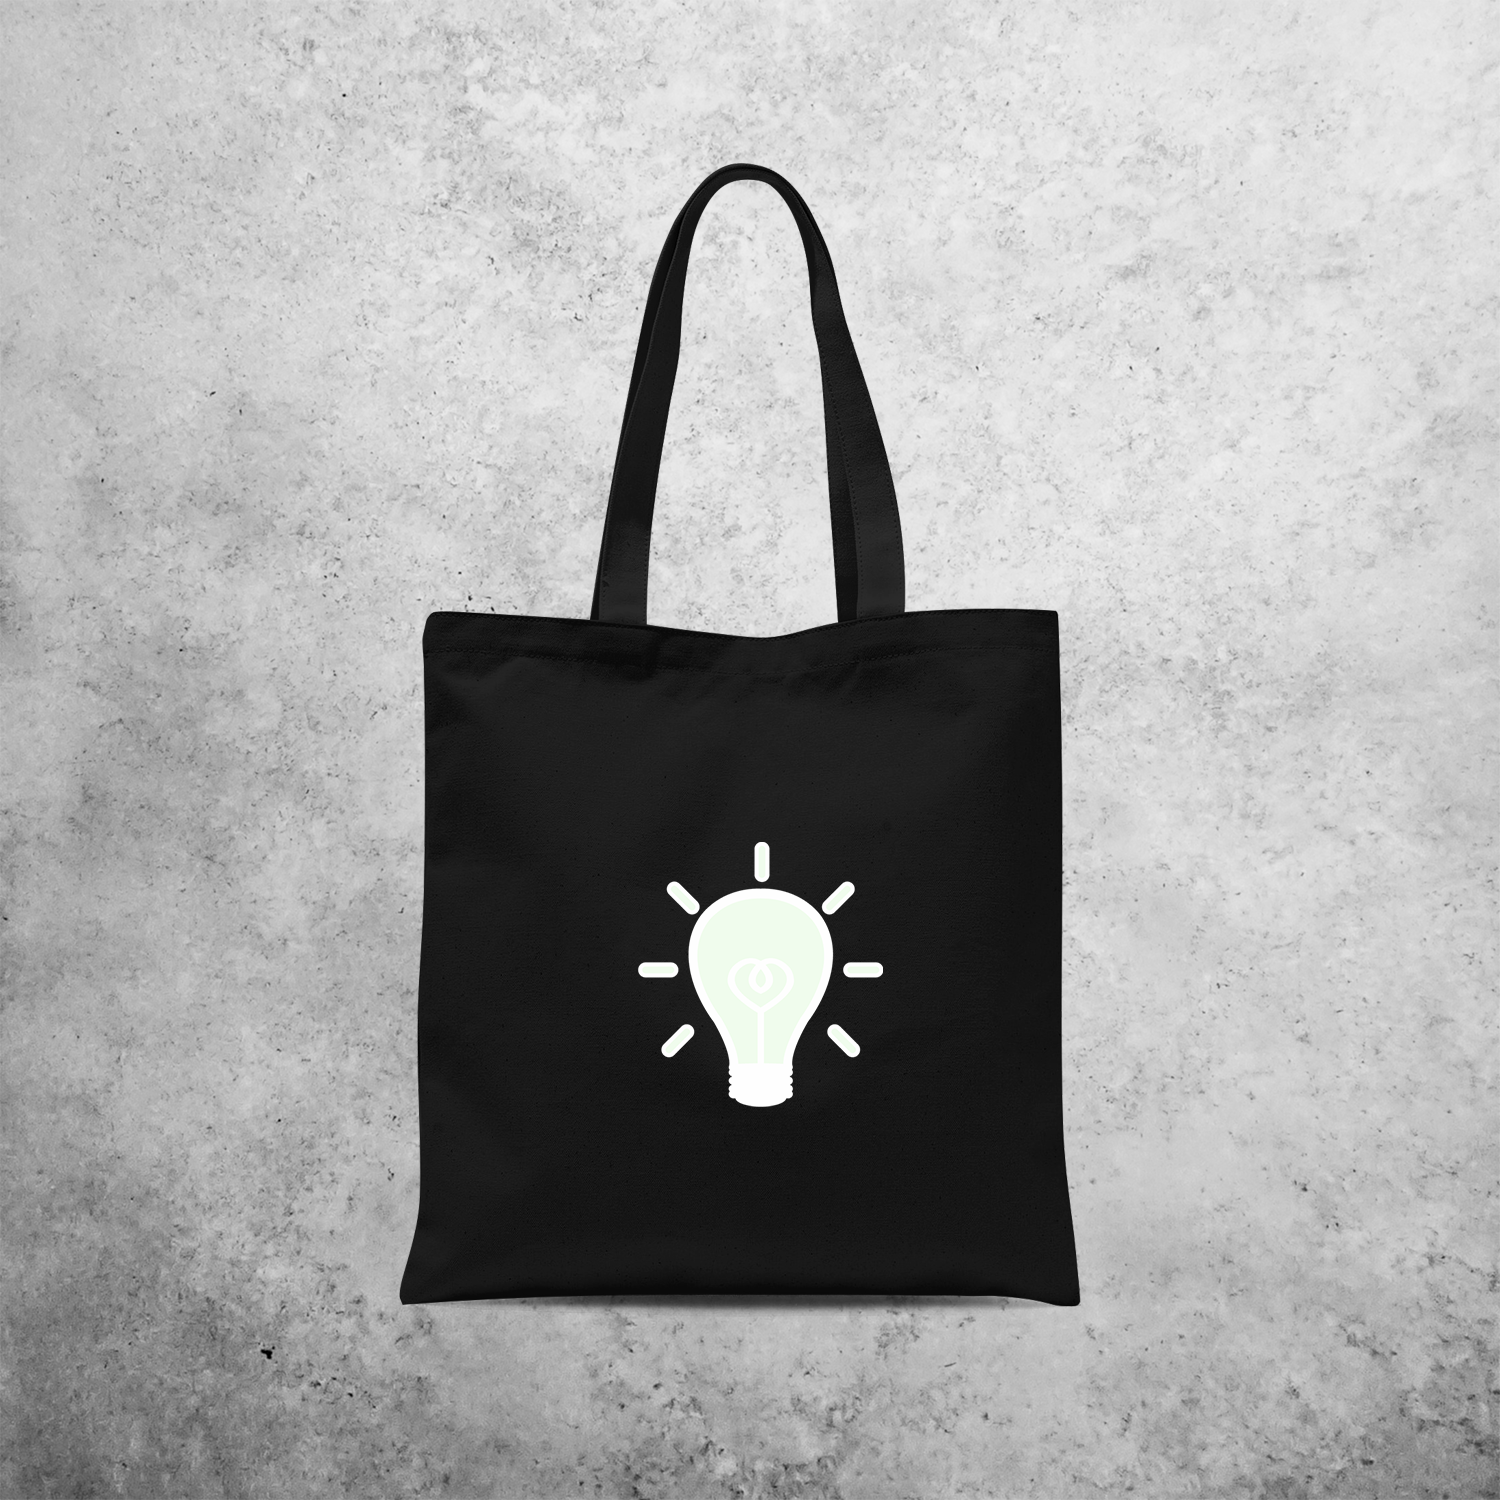 Light bulb glow in the dark tote bag